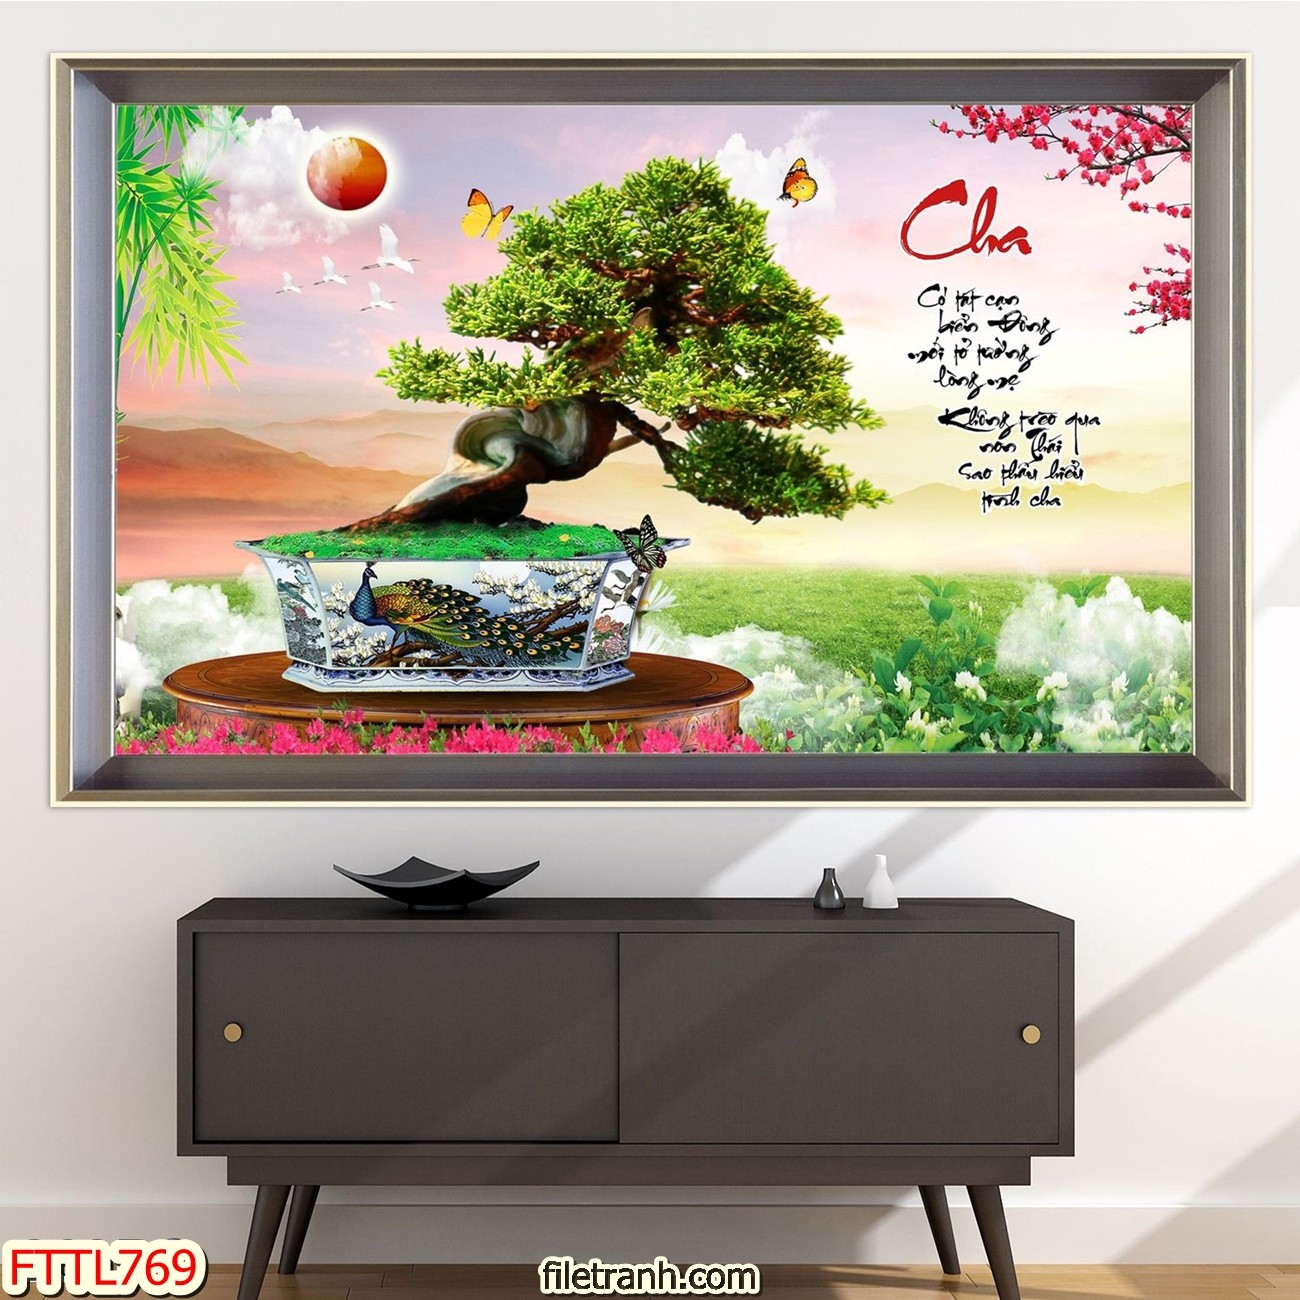 https://filetranh.com/file-tranh-chau-mai-bonsai/file-tranh-chau-mai-bonsai-fttl769.html